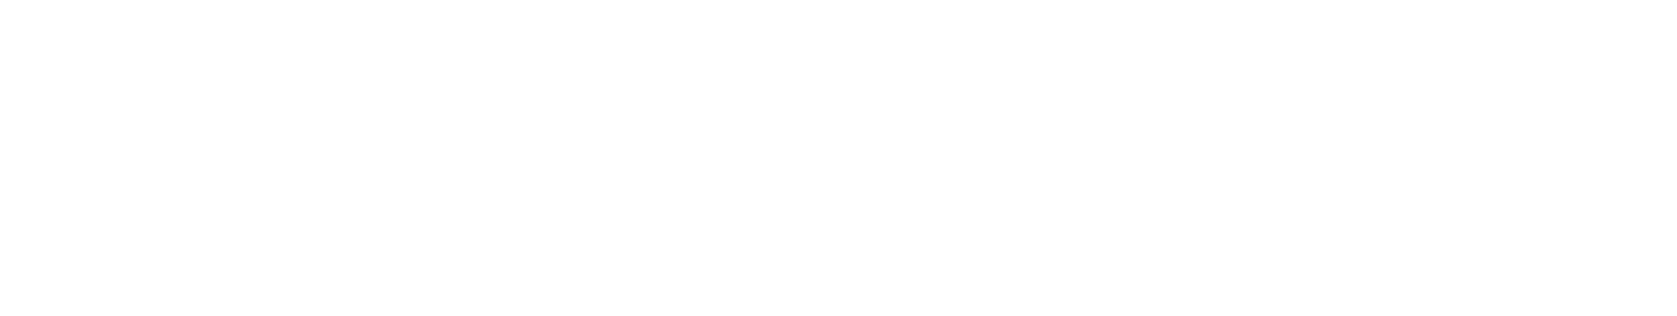 Weave Communications logo large for dark backgrounds (transparent PNG)